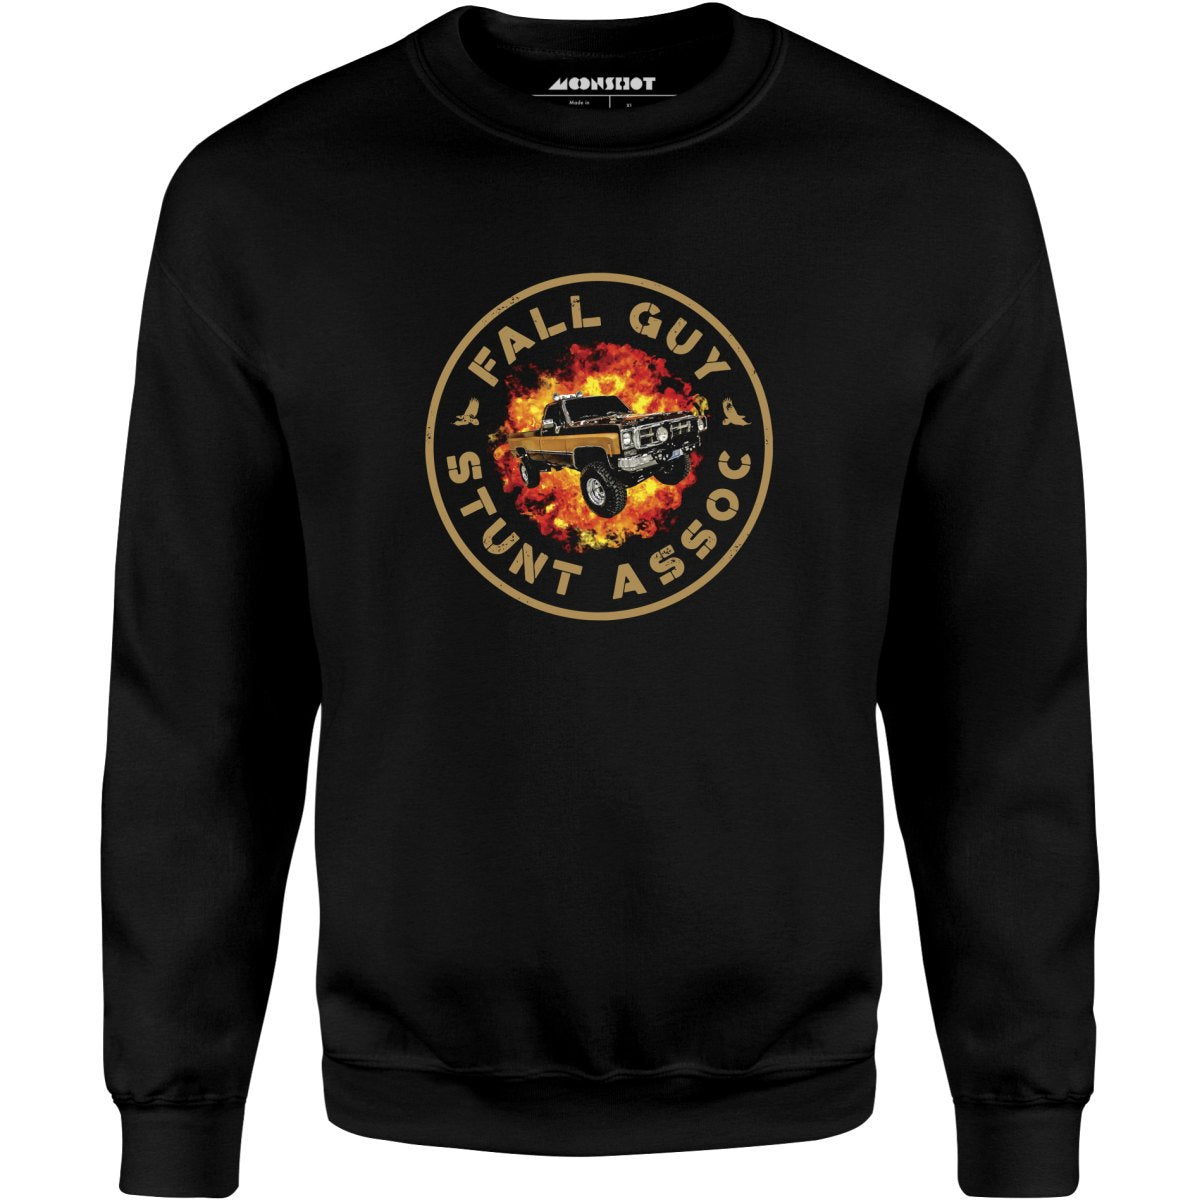 Fall Guy Stunt Association - Unisex Sweatshirt